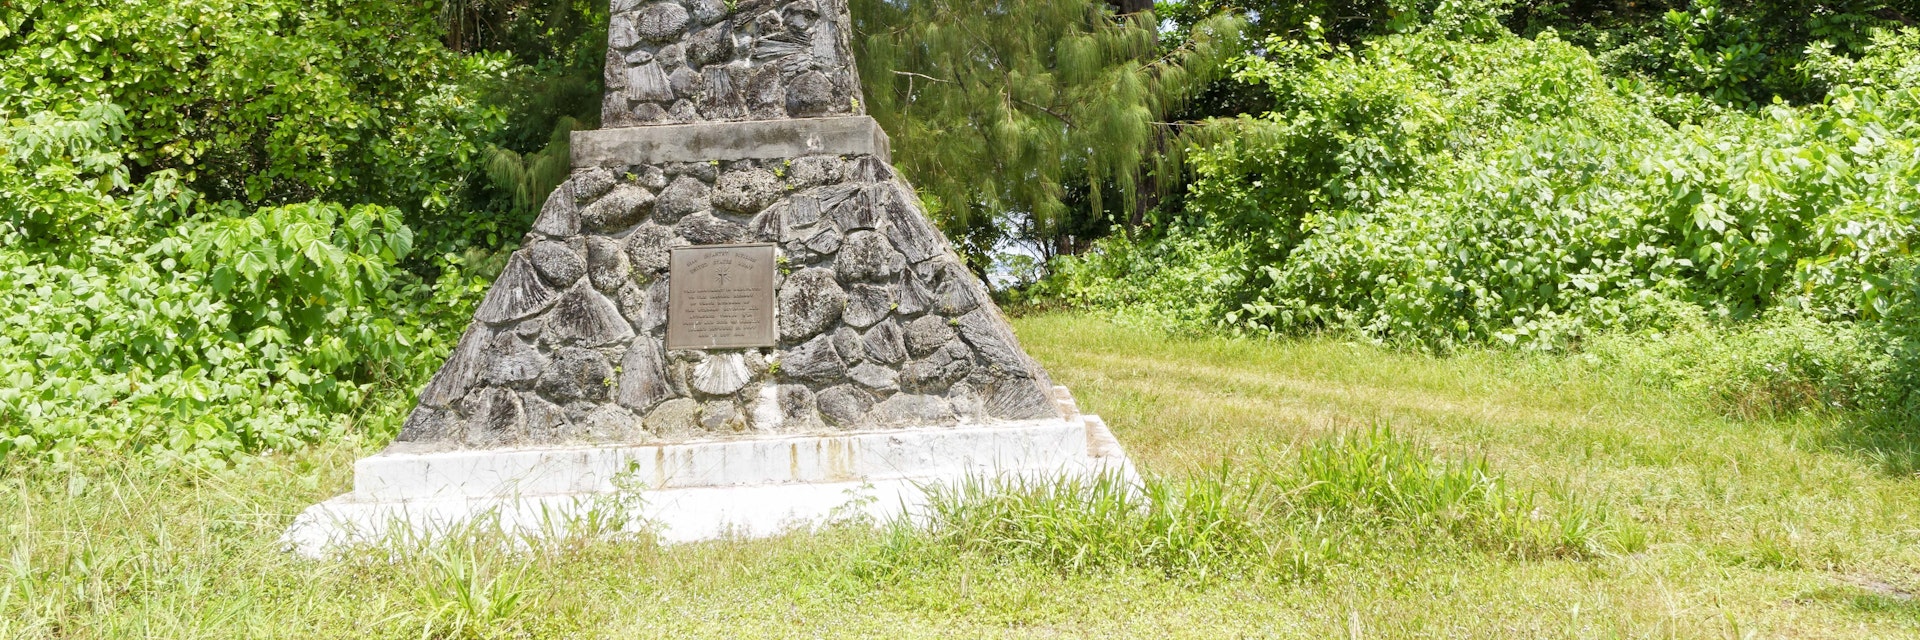 81st Infantry Division Memorial, Peleliu Island, Palau